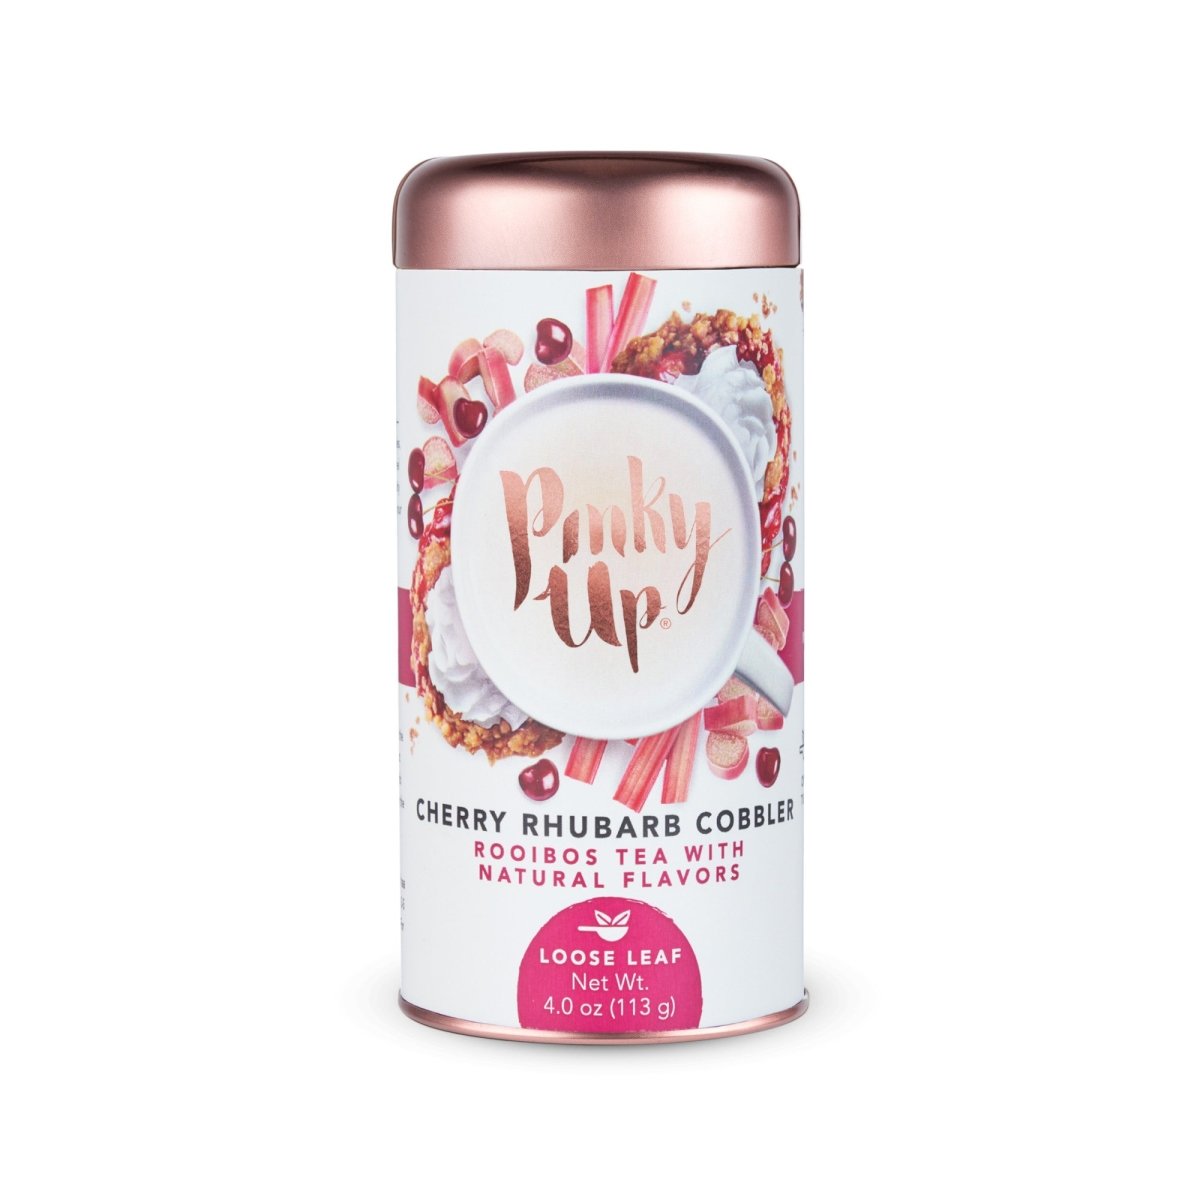 Pinky Up Cherry Rhubarb Loose Leaf Tea Tins - lily & onyx